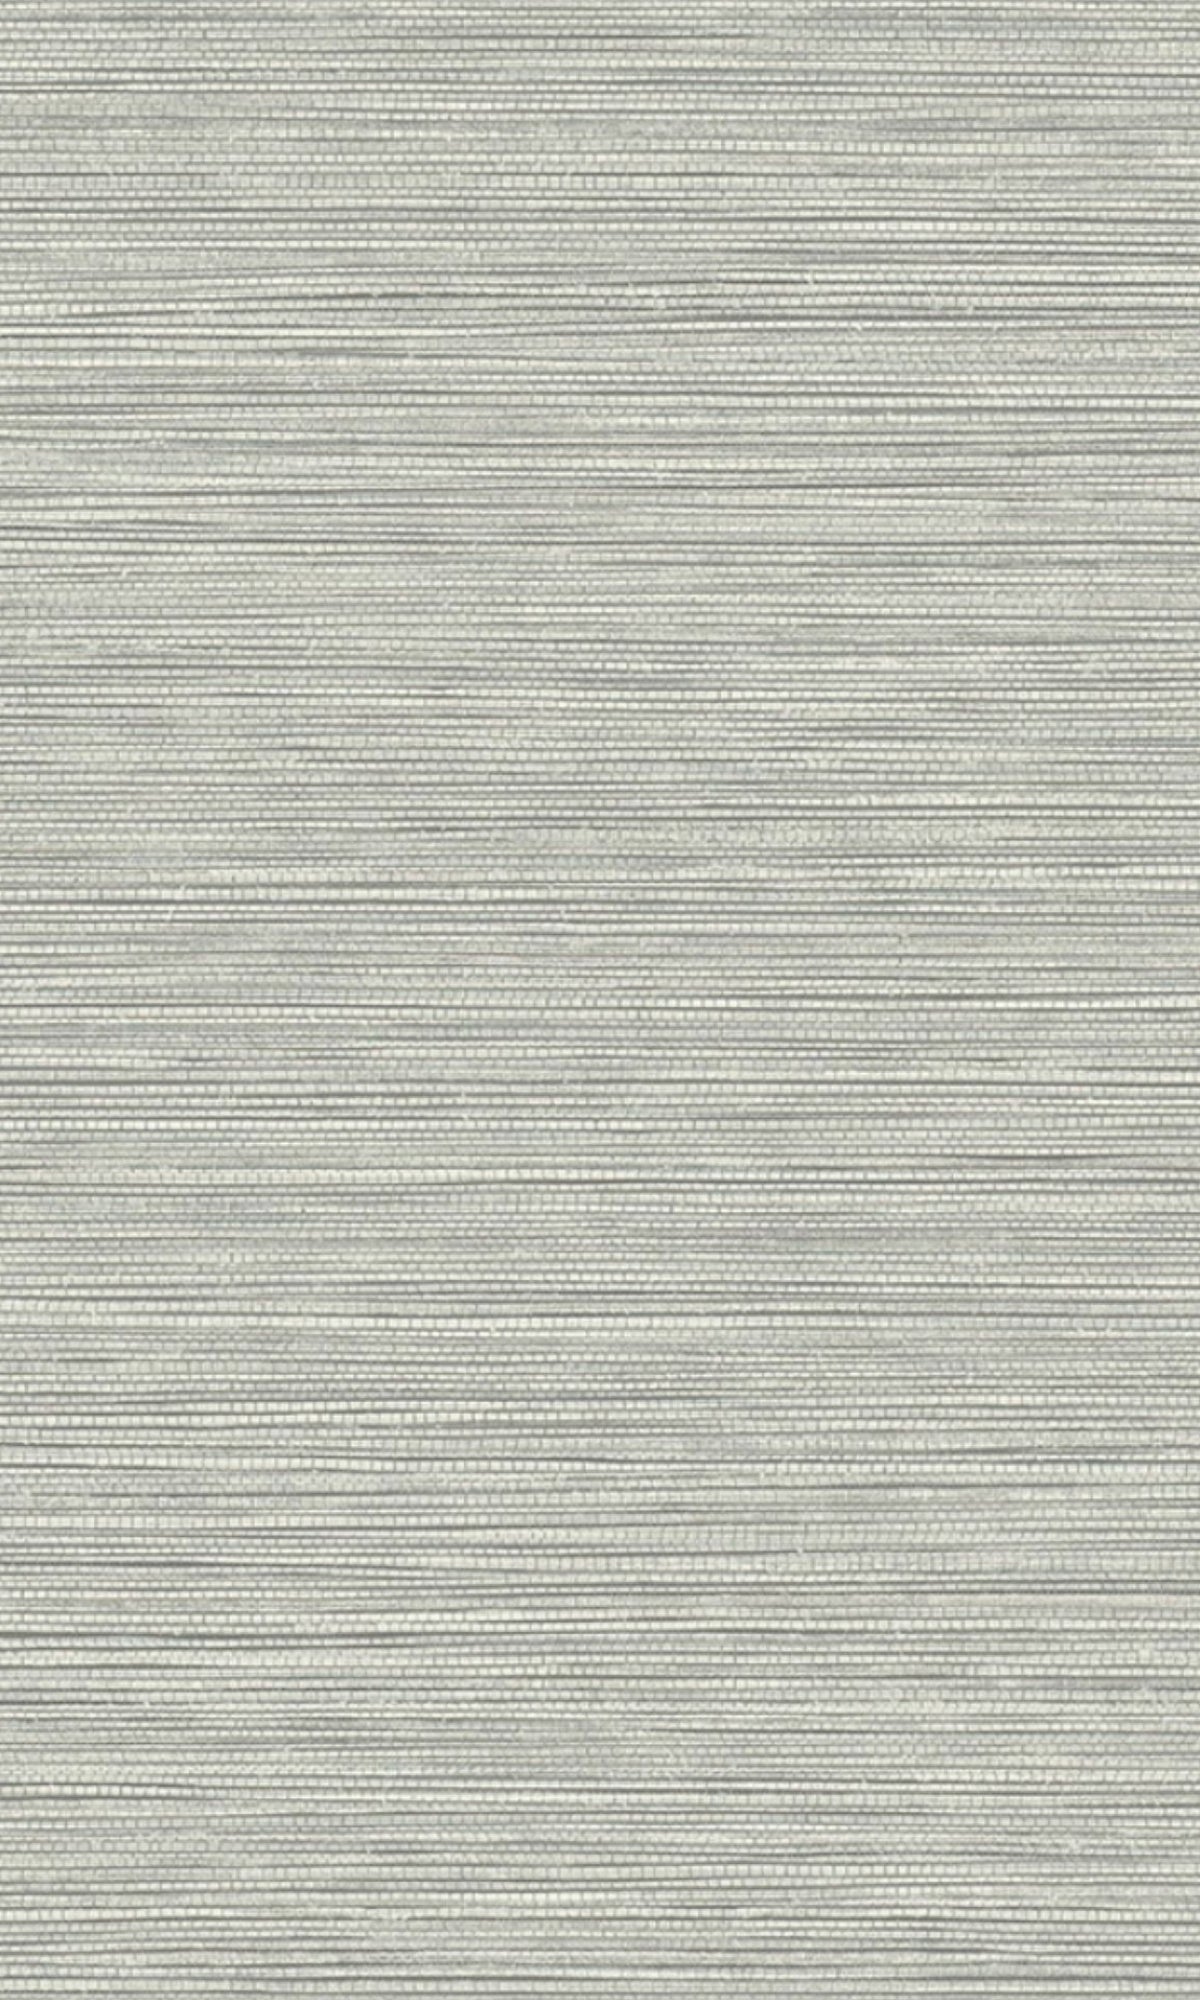 Cove Grey Horizontal Line Textured Vinyl Commercial Wallpaper C7554